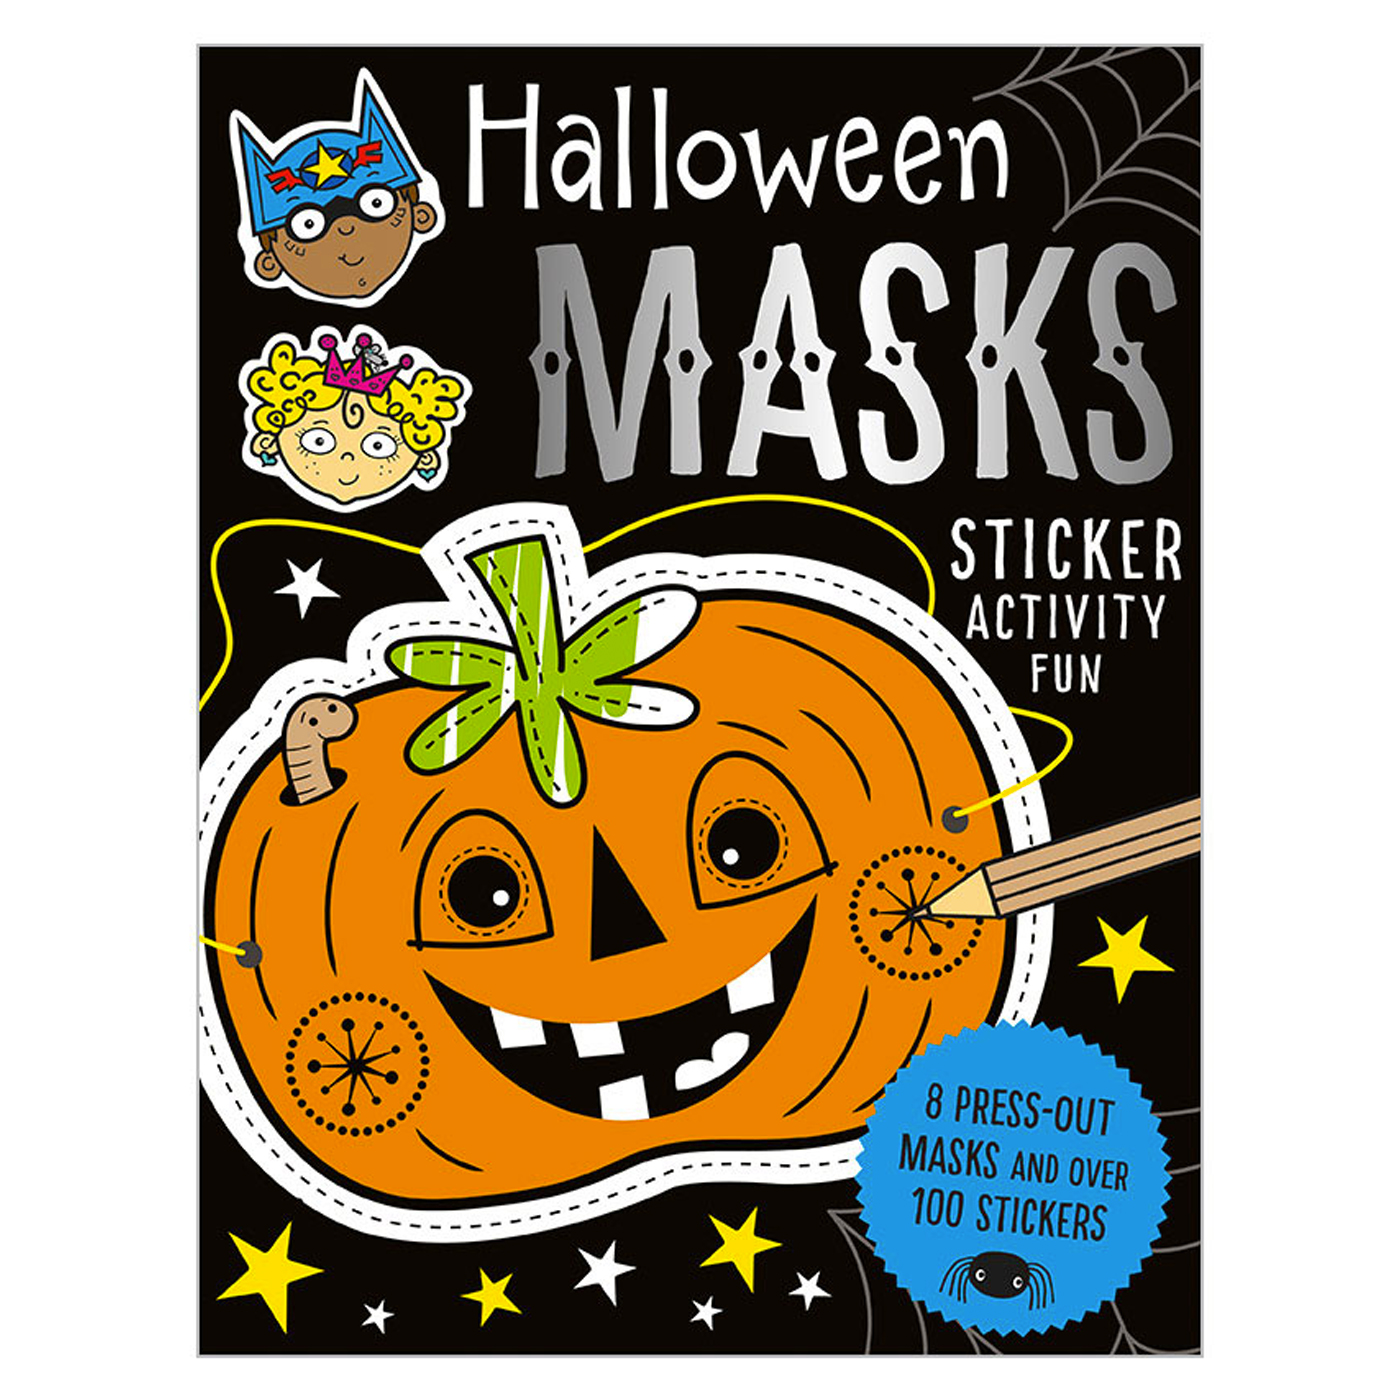  Halloween Masks Sticker Activity Fun